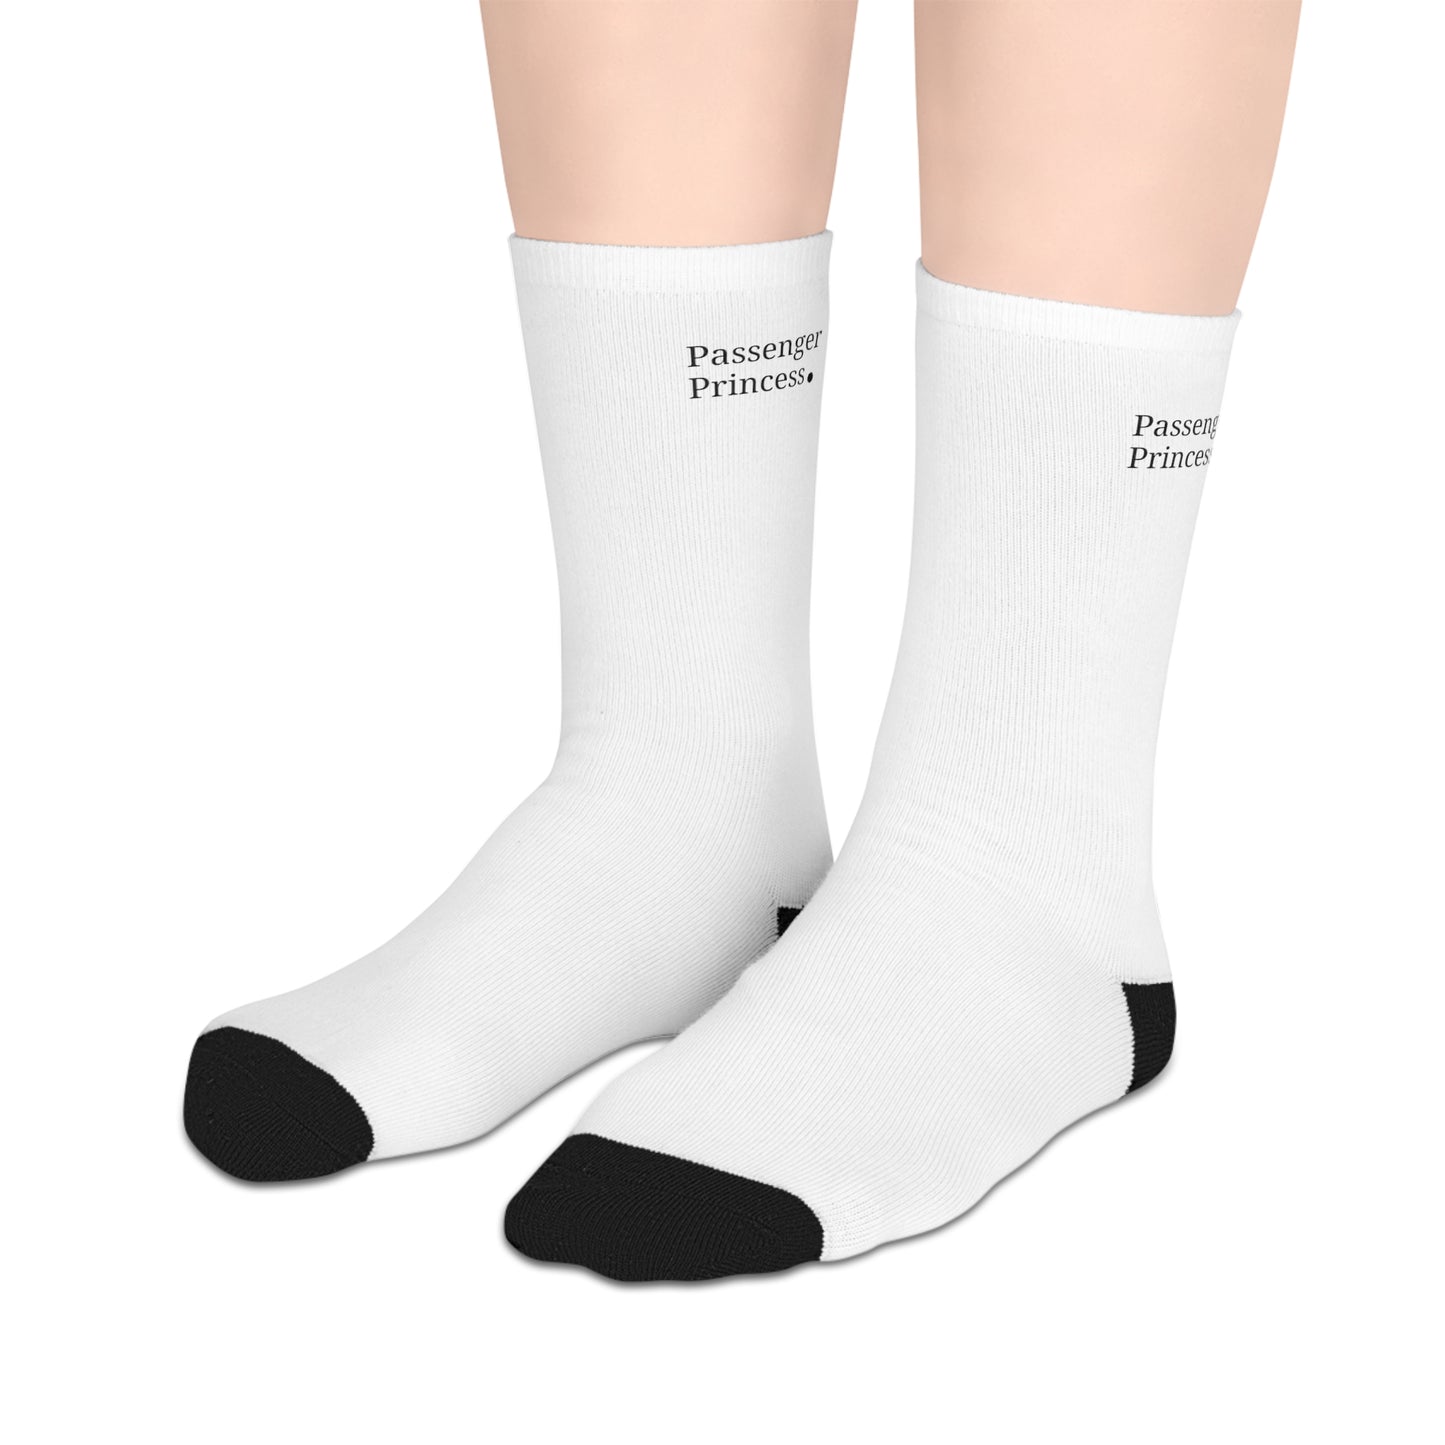 Passenger Princess Mid-length Socks